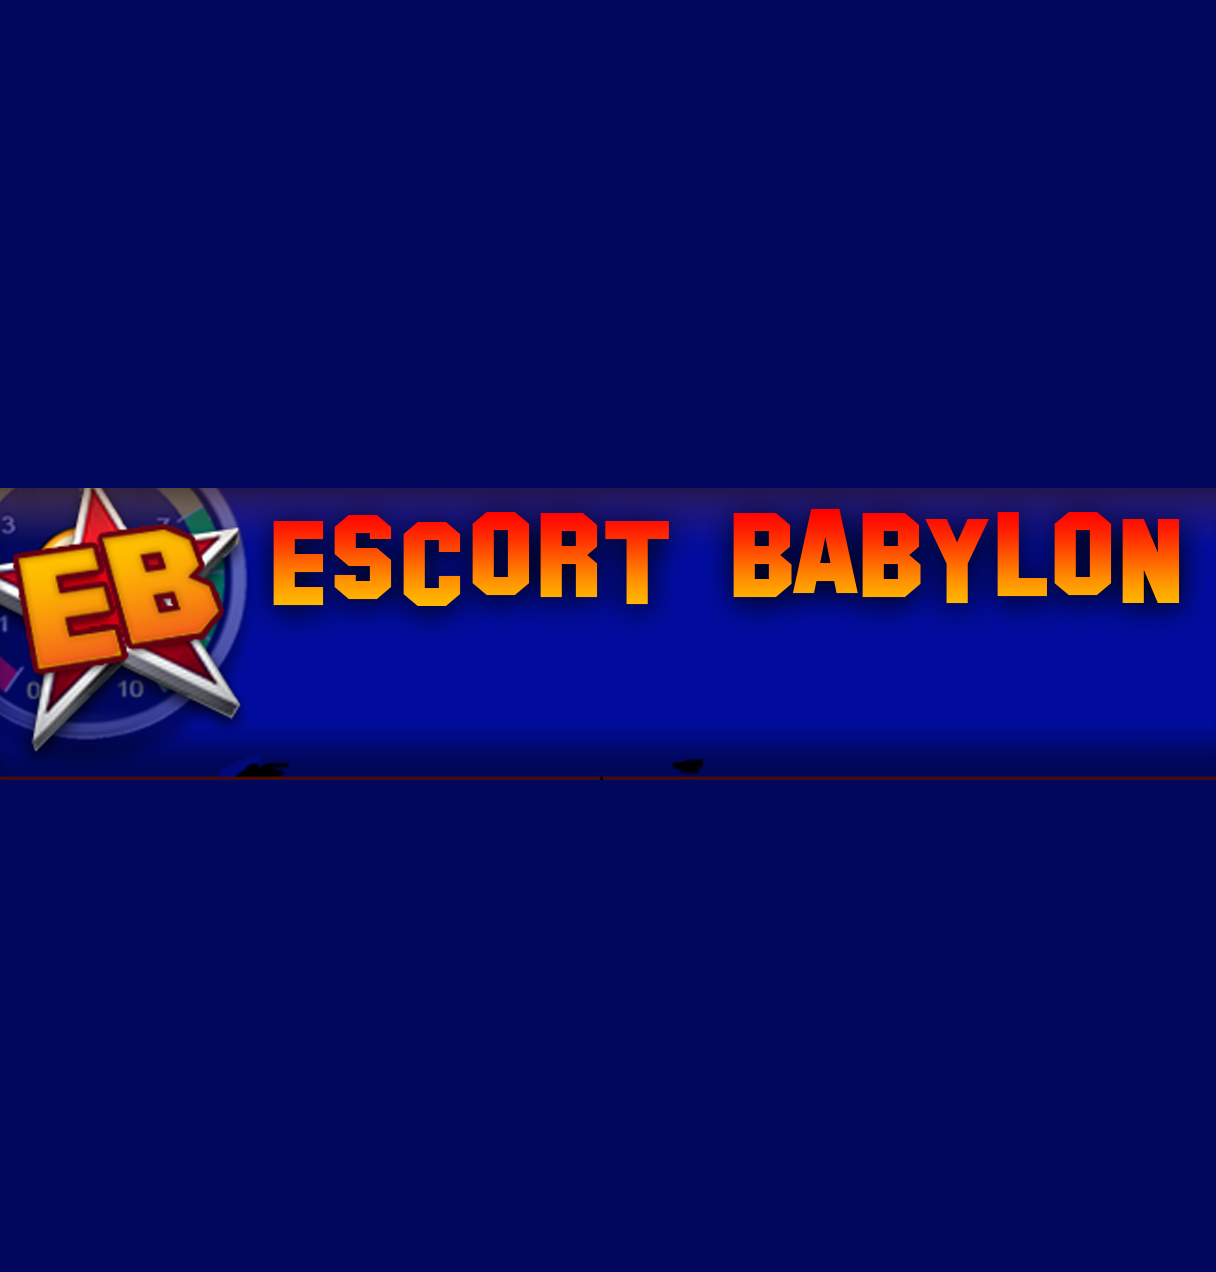 escortbabylon logo